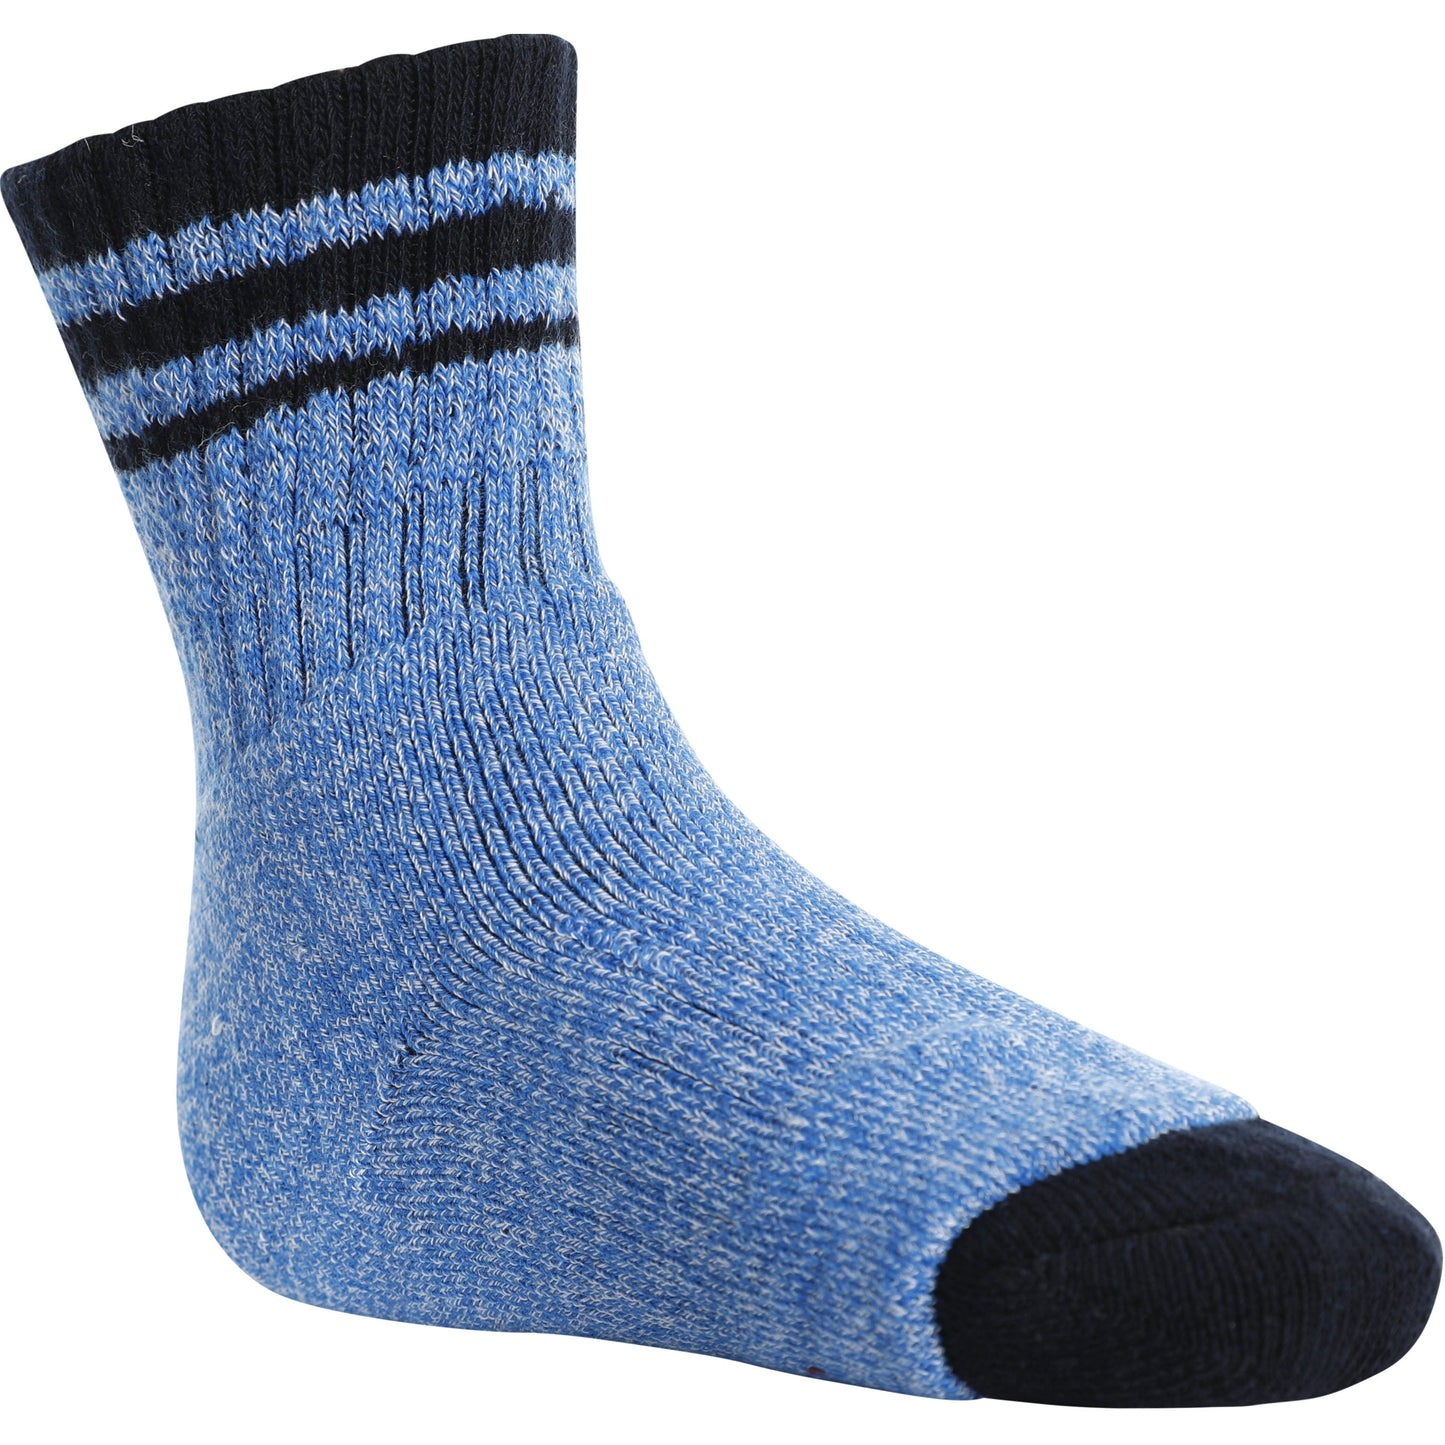 Vic Kids Anti Blister Socks - Bright Blue Marl